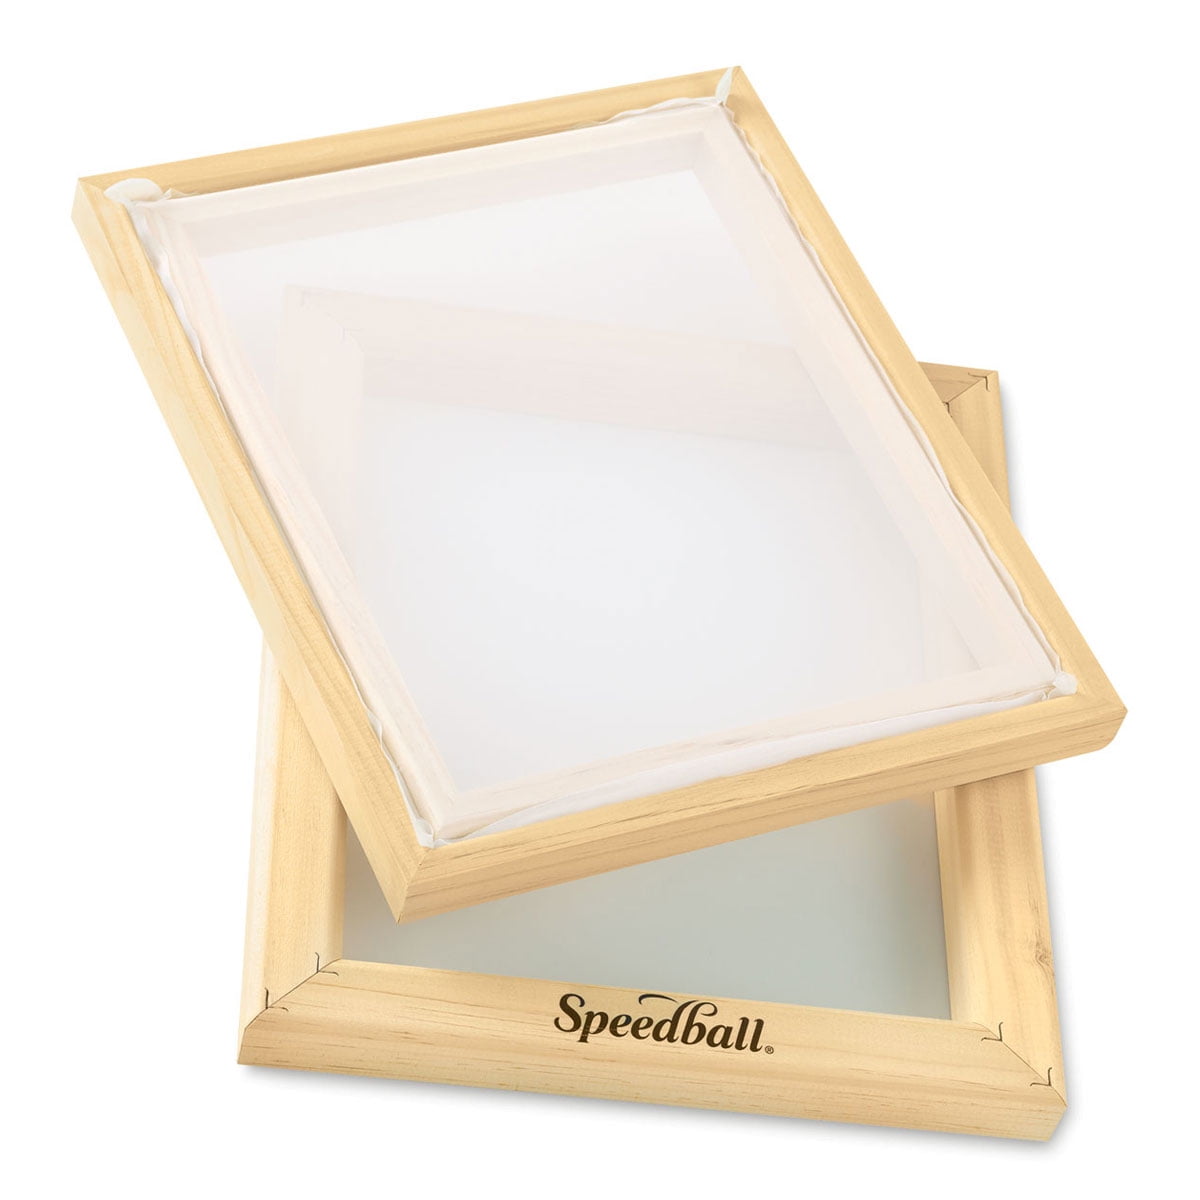 Speedball® Screen Printing Frame. 10 x 12